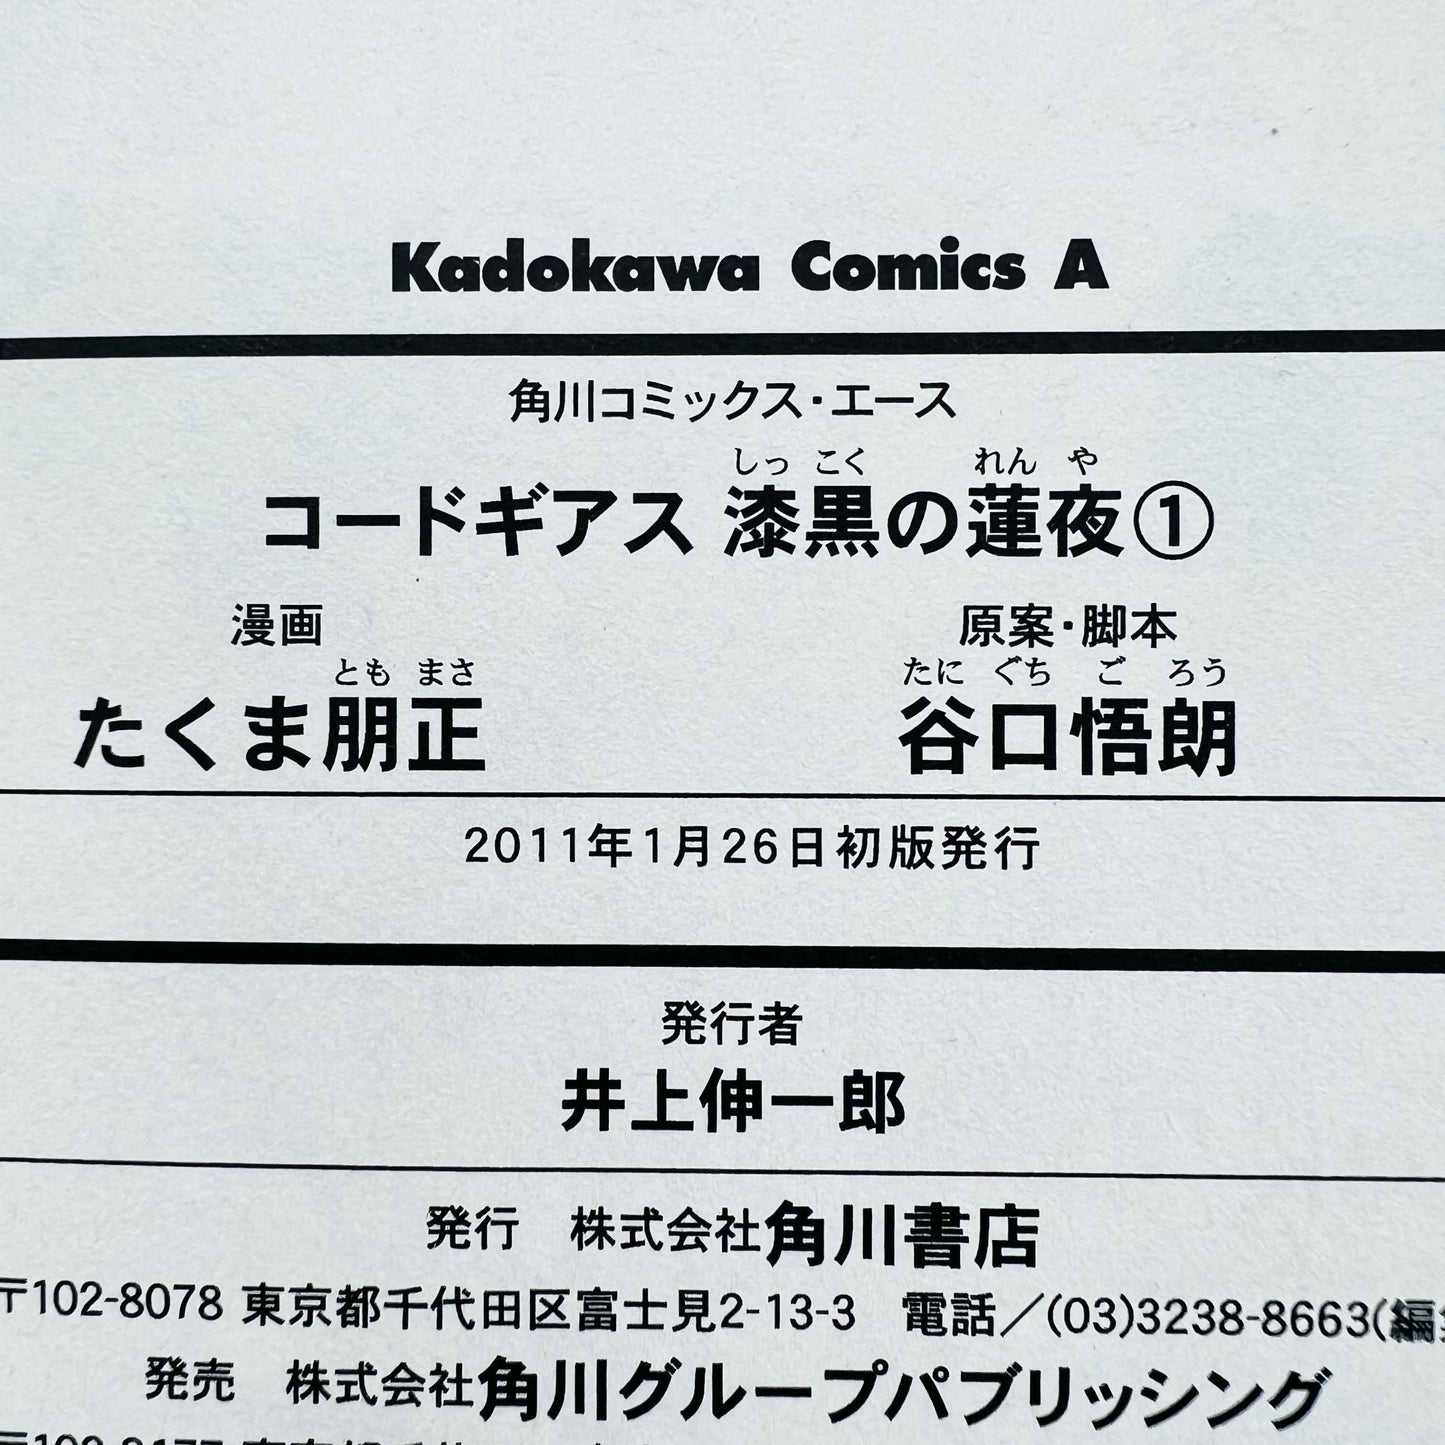 Code Geass : Renya of Darkness - Volume 01 - 1stPrint.net - 1st First Print Edition Manga Store - M-CODGEASRENYA-01-001